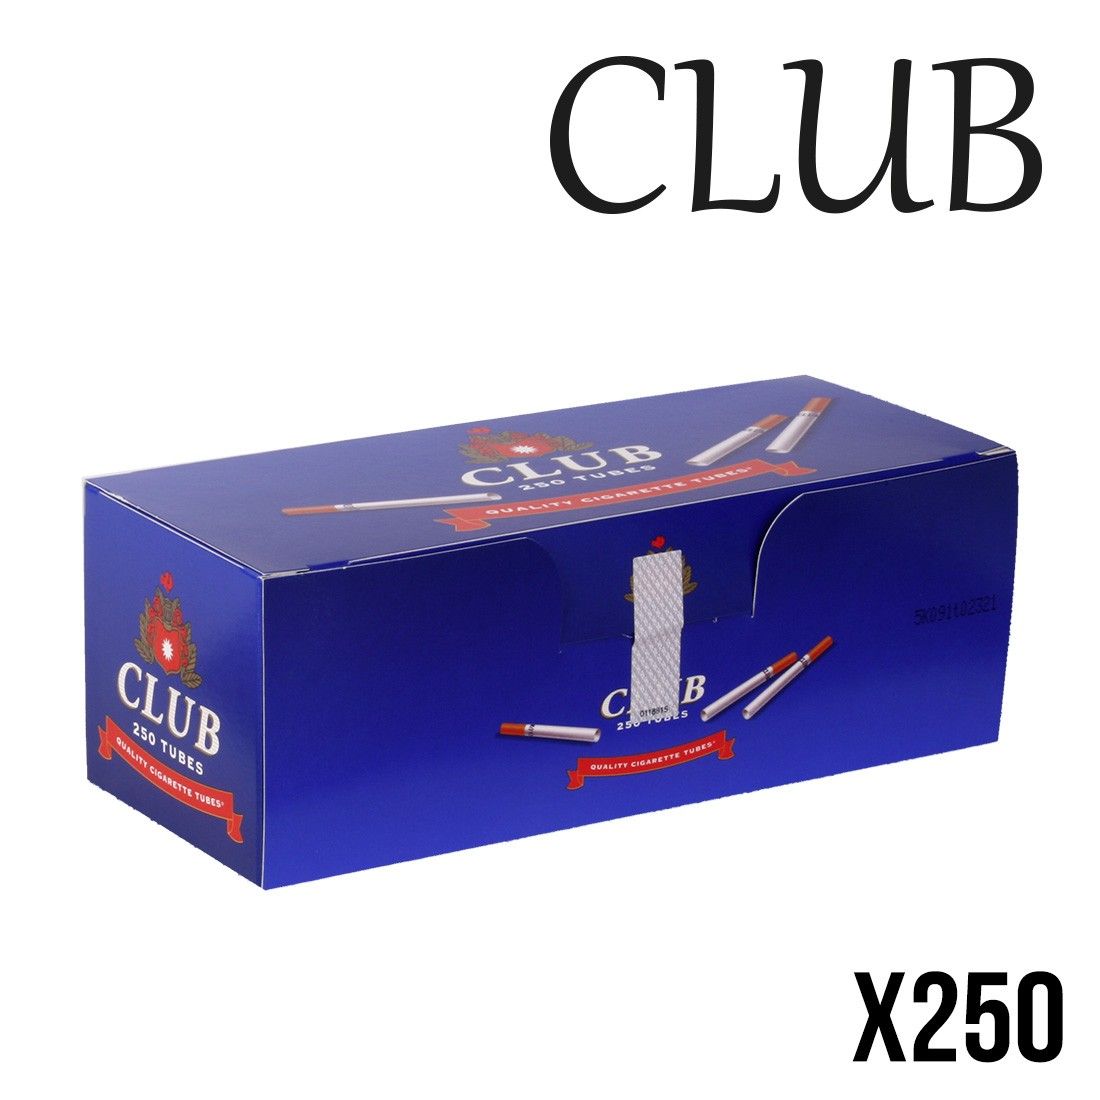 Acheter tube club 250 pour cigarette, tubes a cigarettes, Tube à cigarette,  Tube à cigarette